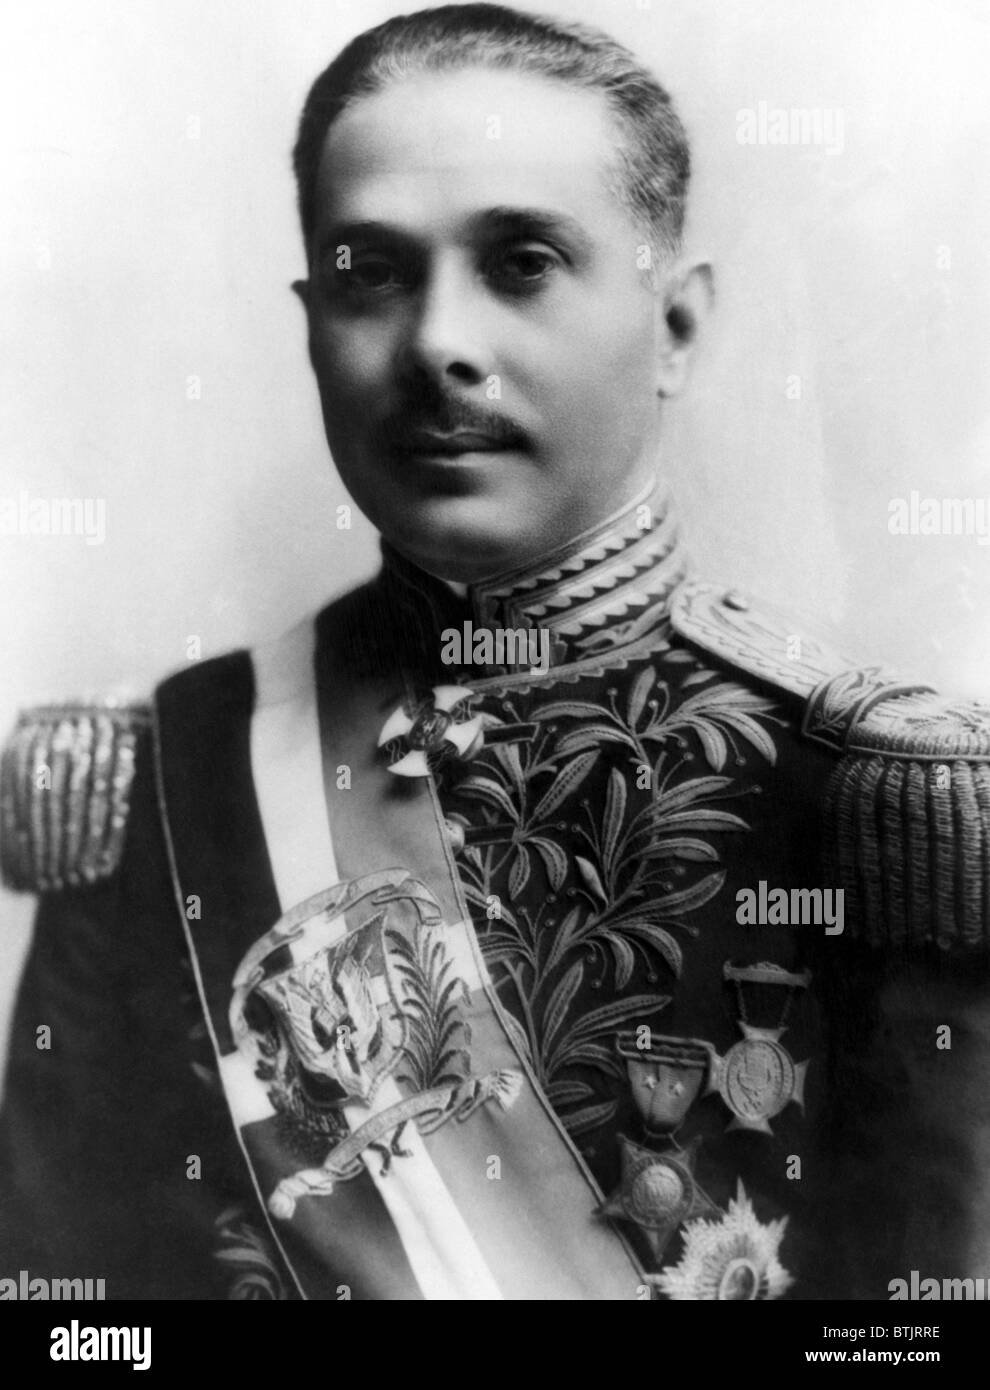 General Rafael Leonidas Trujillo, (1891-1961), dictator and former President of the Dominican Republic, 1939. Stock Photo